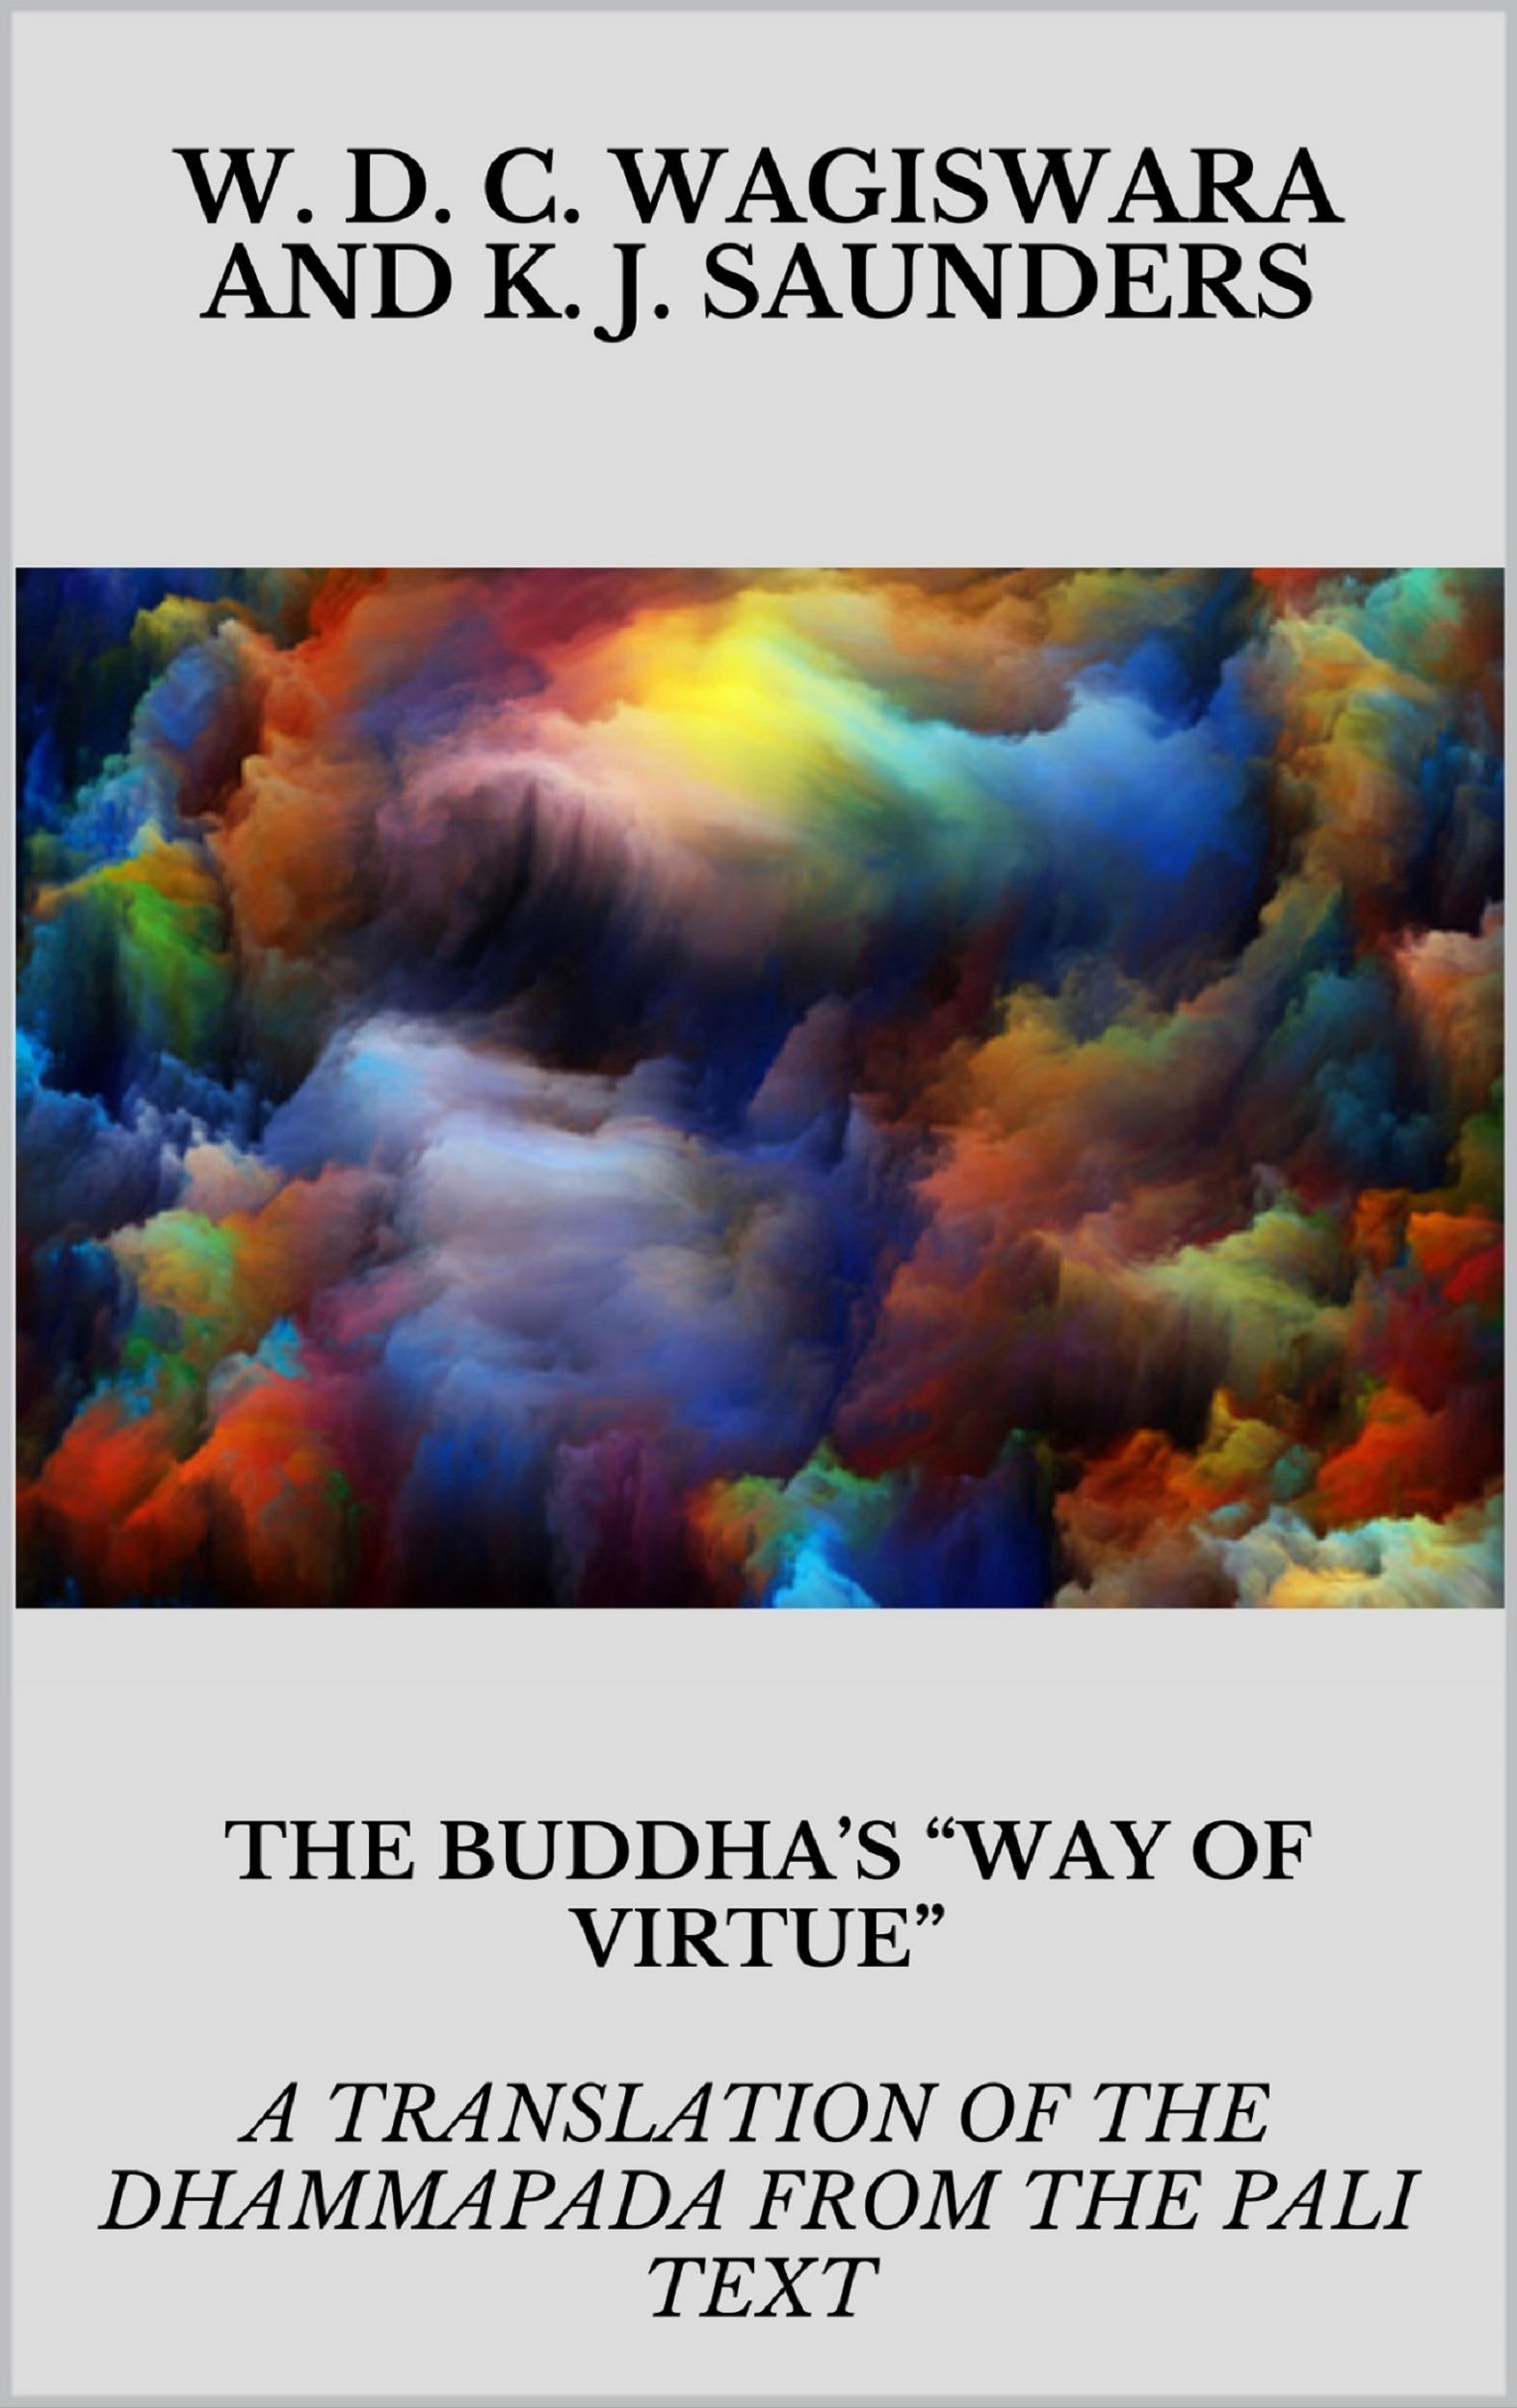 The Buddha’s way of virtue